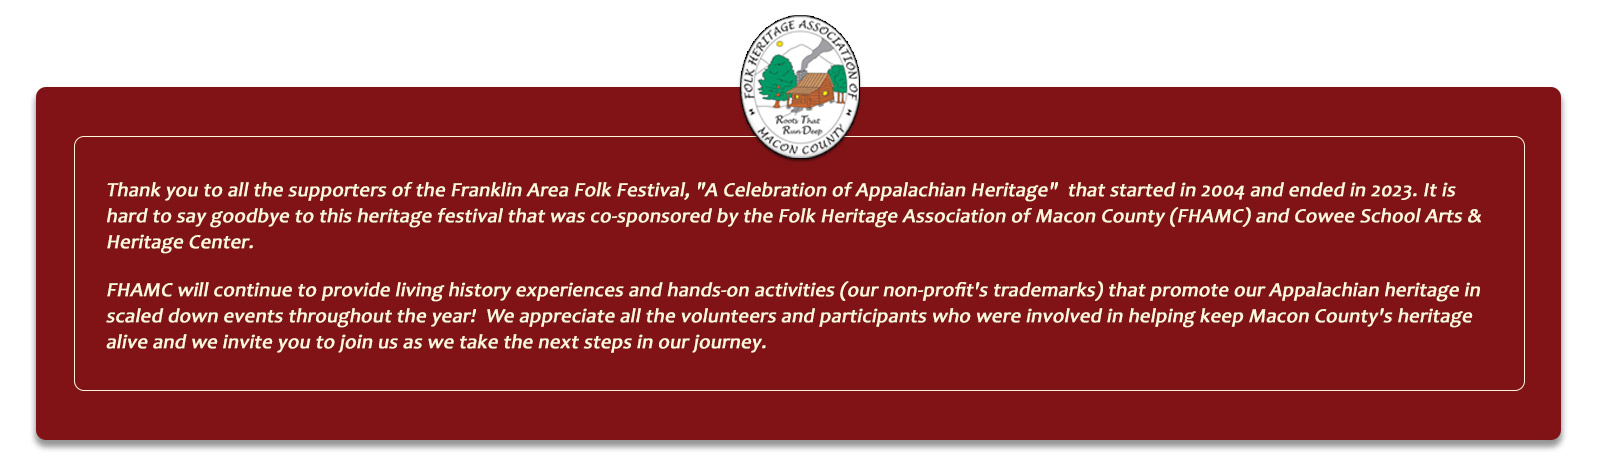 Franklin NC Folk Festival Announcement